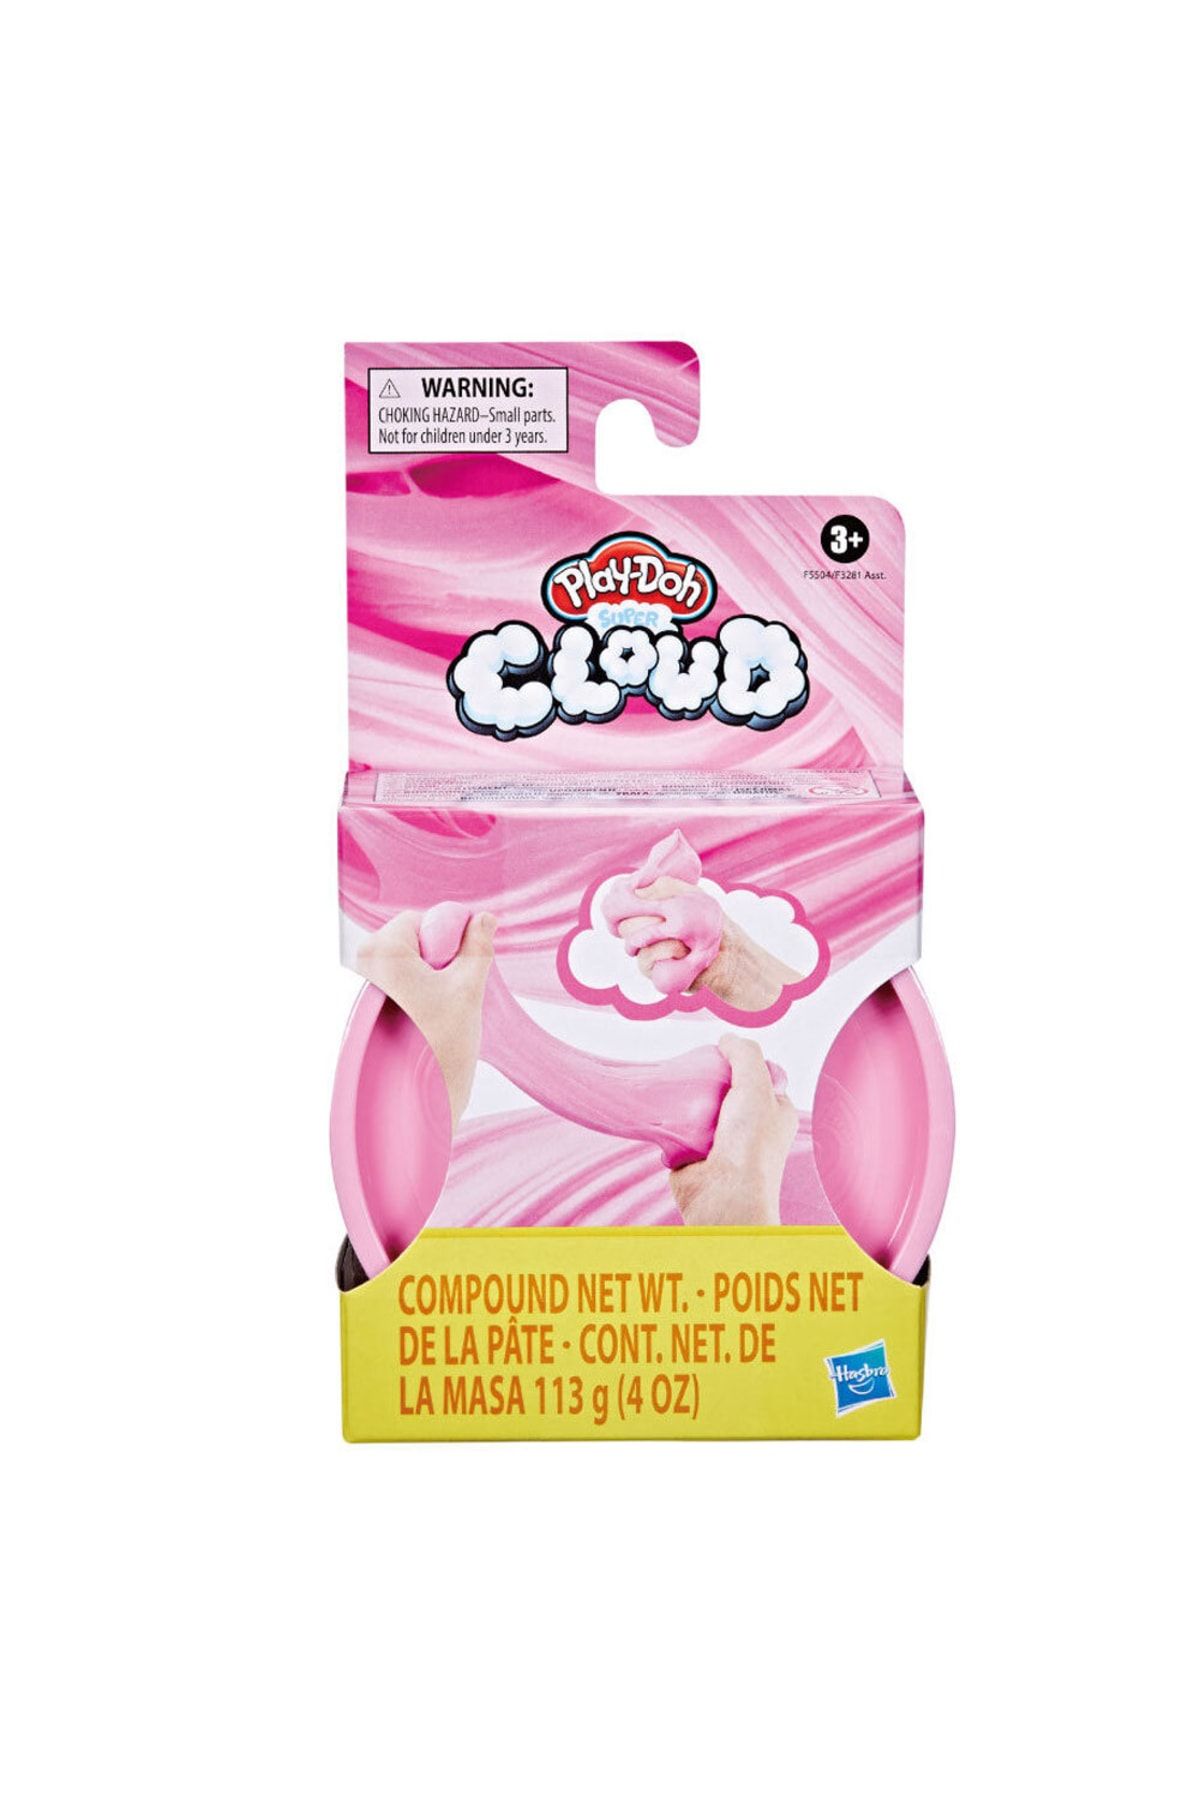 Play Doh Play-doh Super Cloud Bulut Hamur Pink F3281-f5504